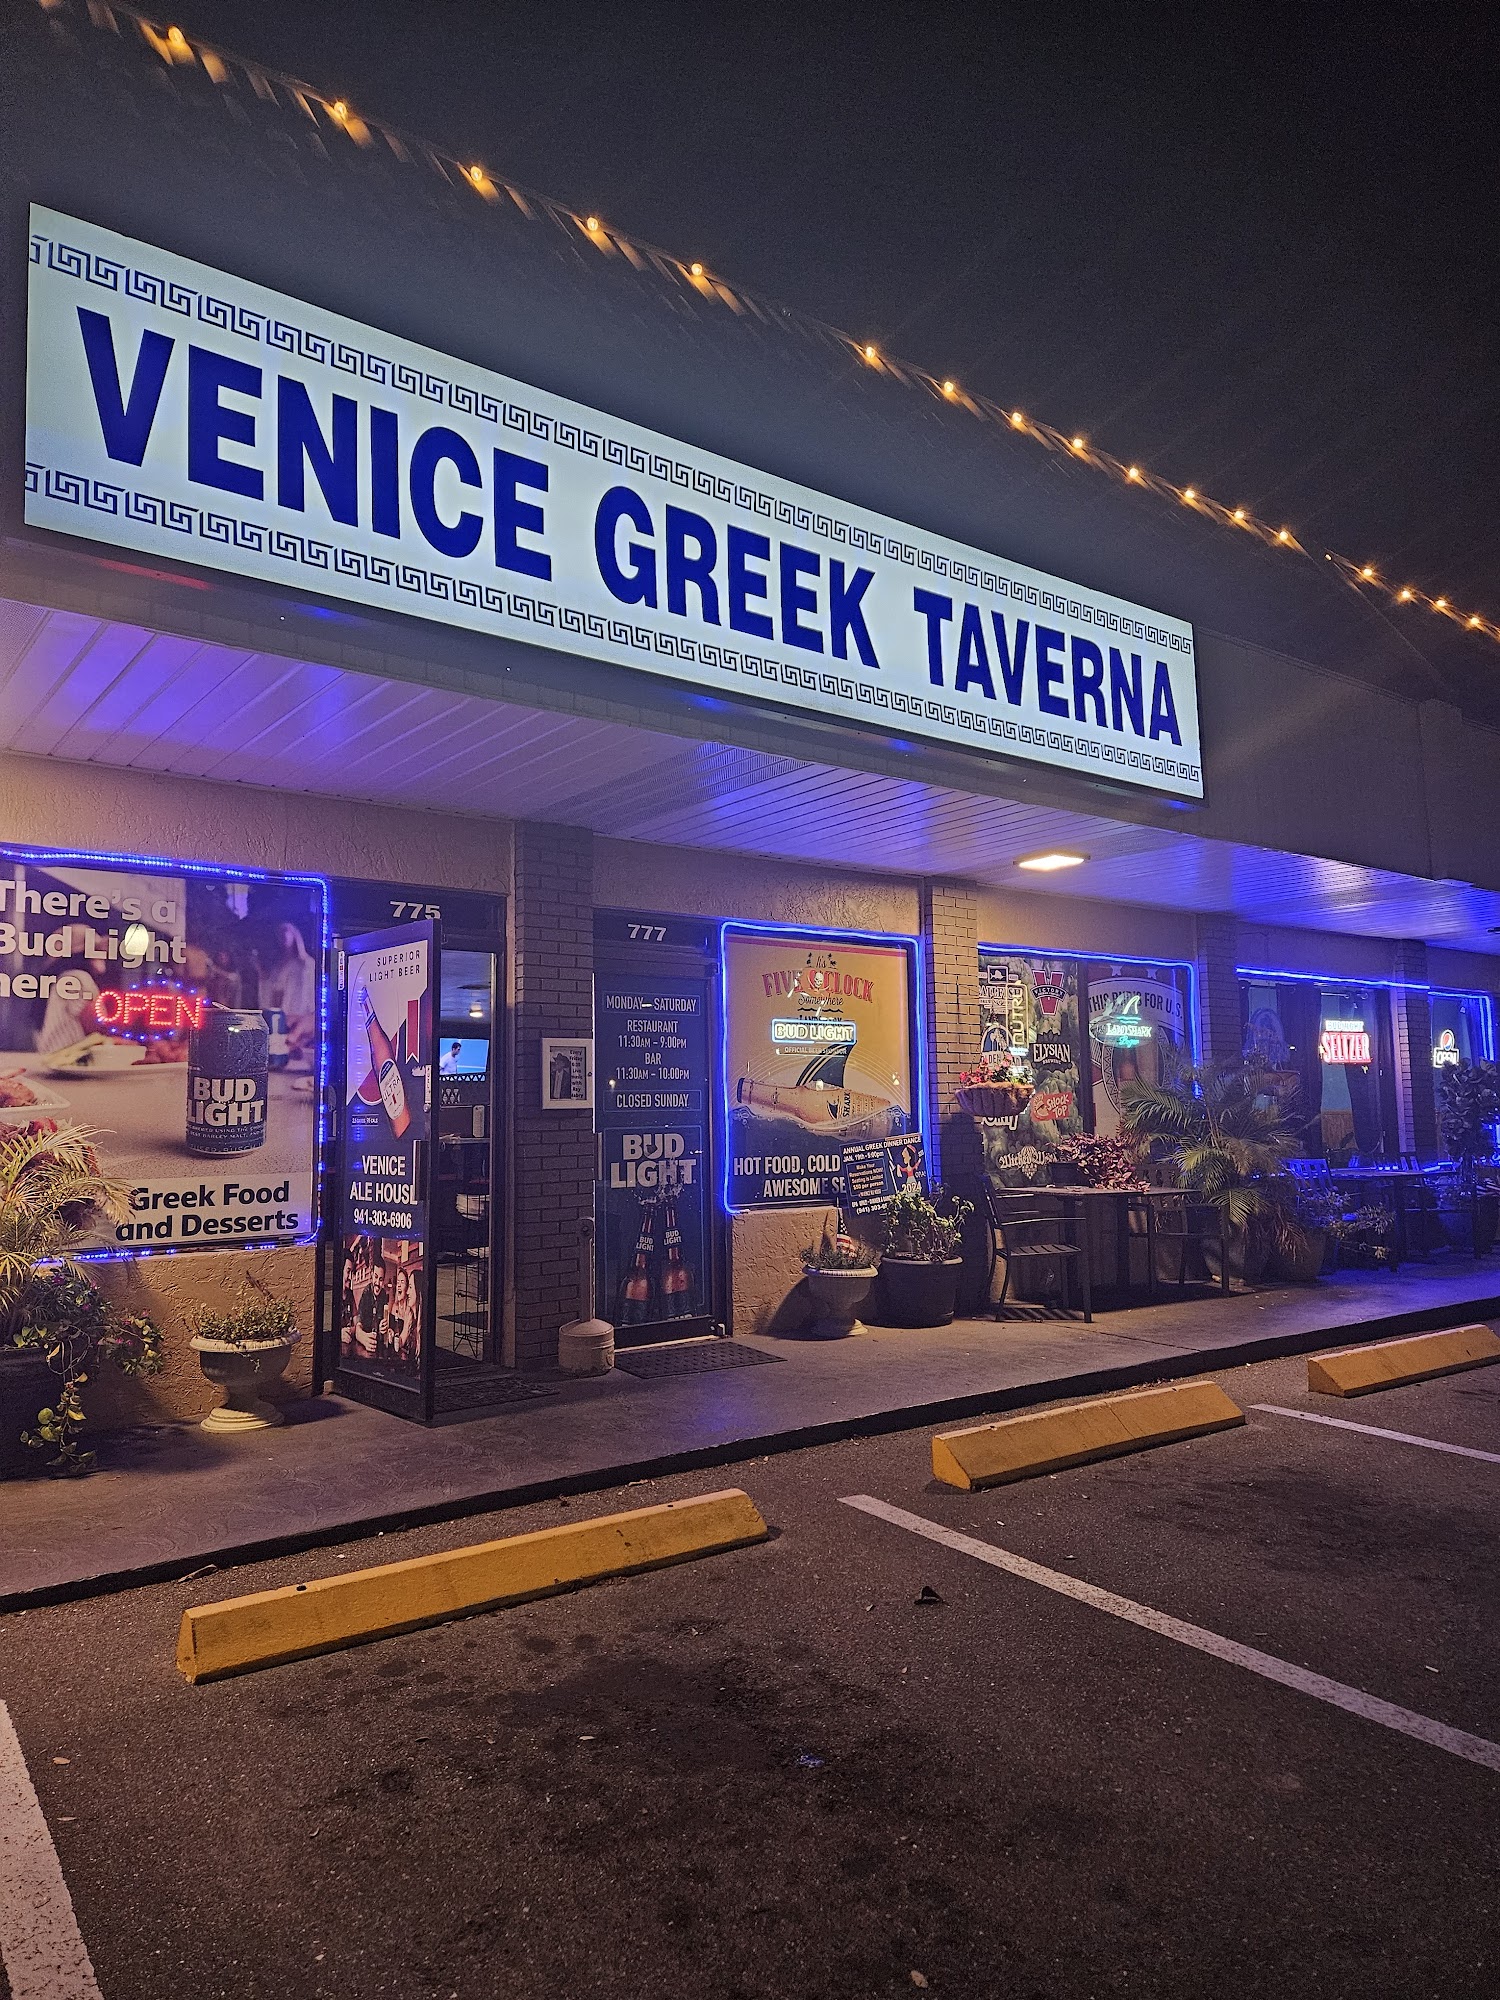 Venice Greek Taverna (formally Venice Ale House)